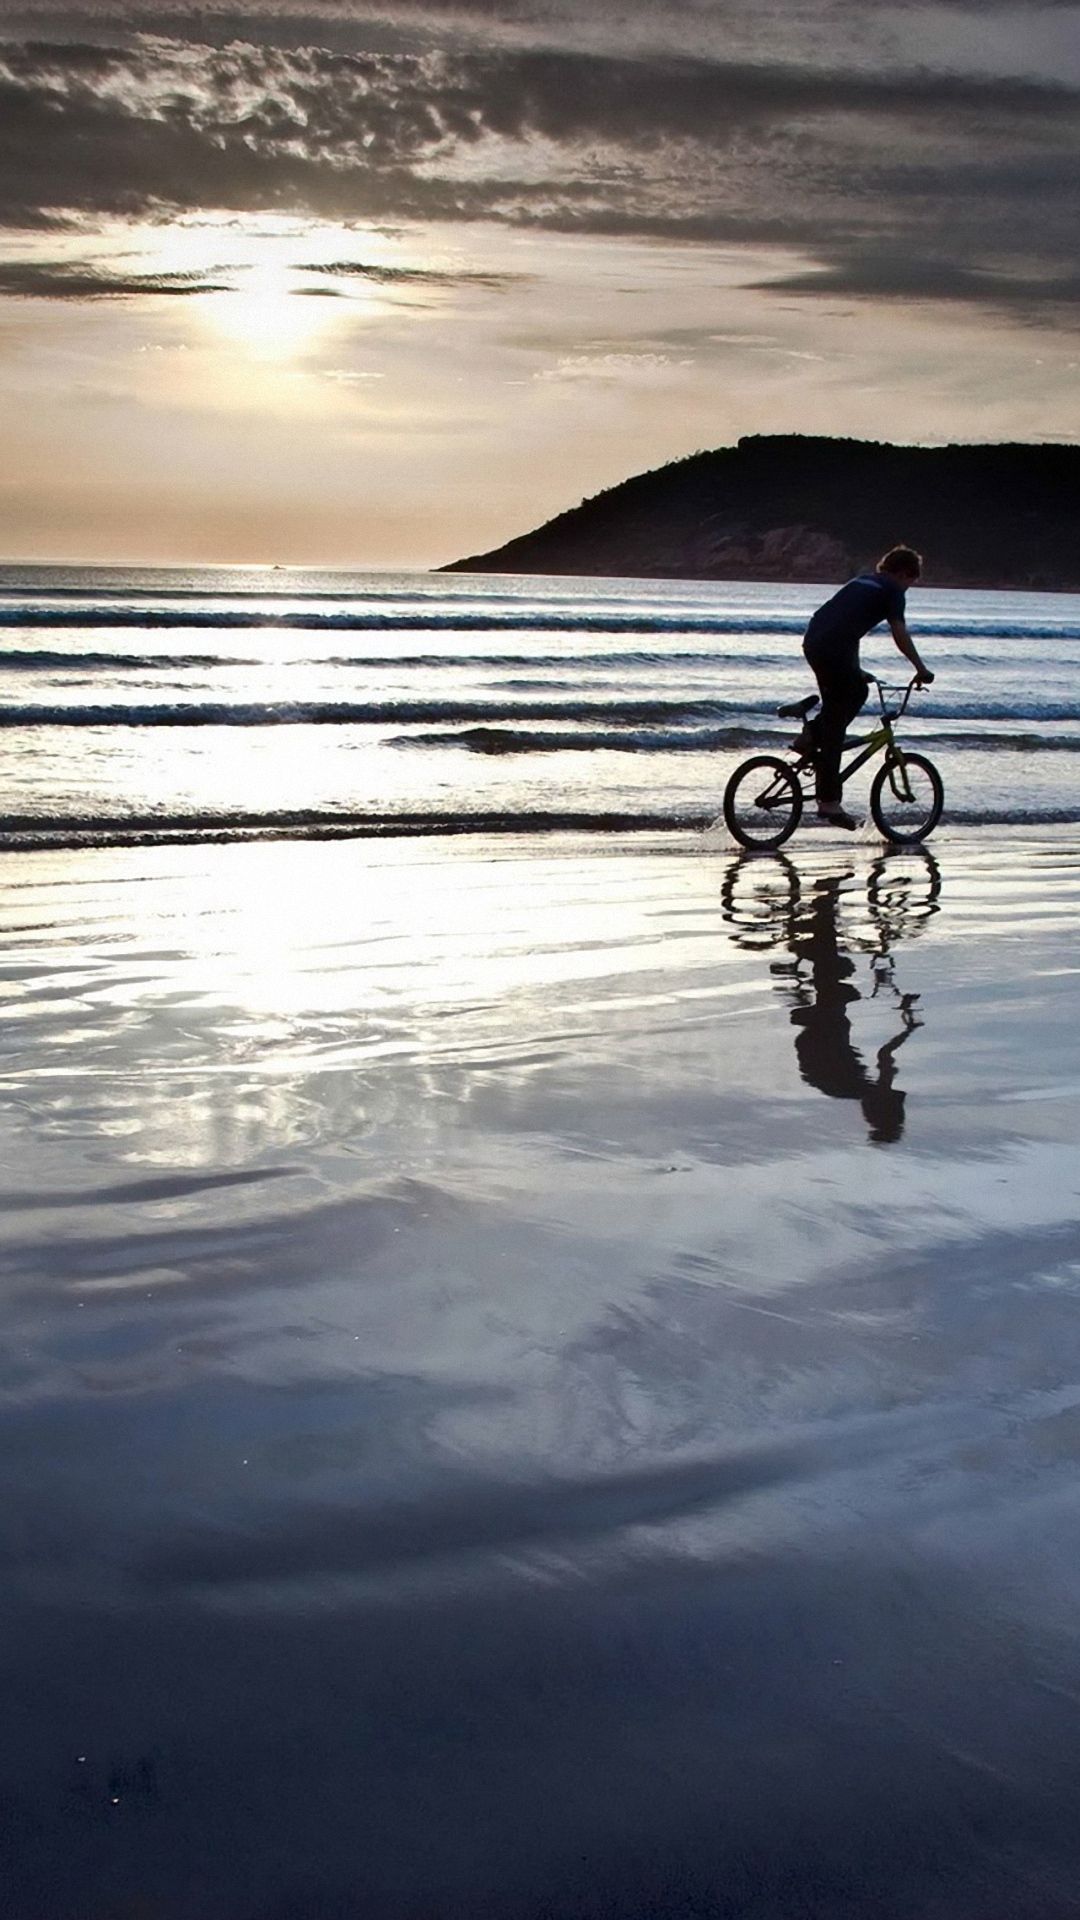 Hd Beach Bike Ride Htc One M8 Wallpaper Bike Ride